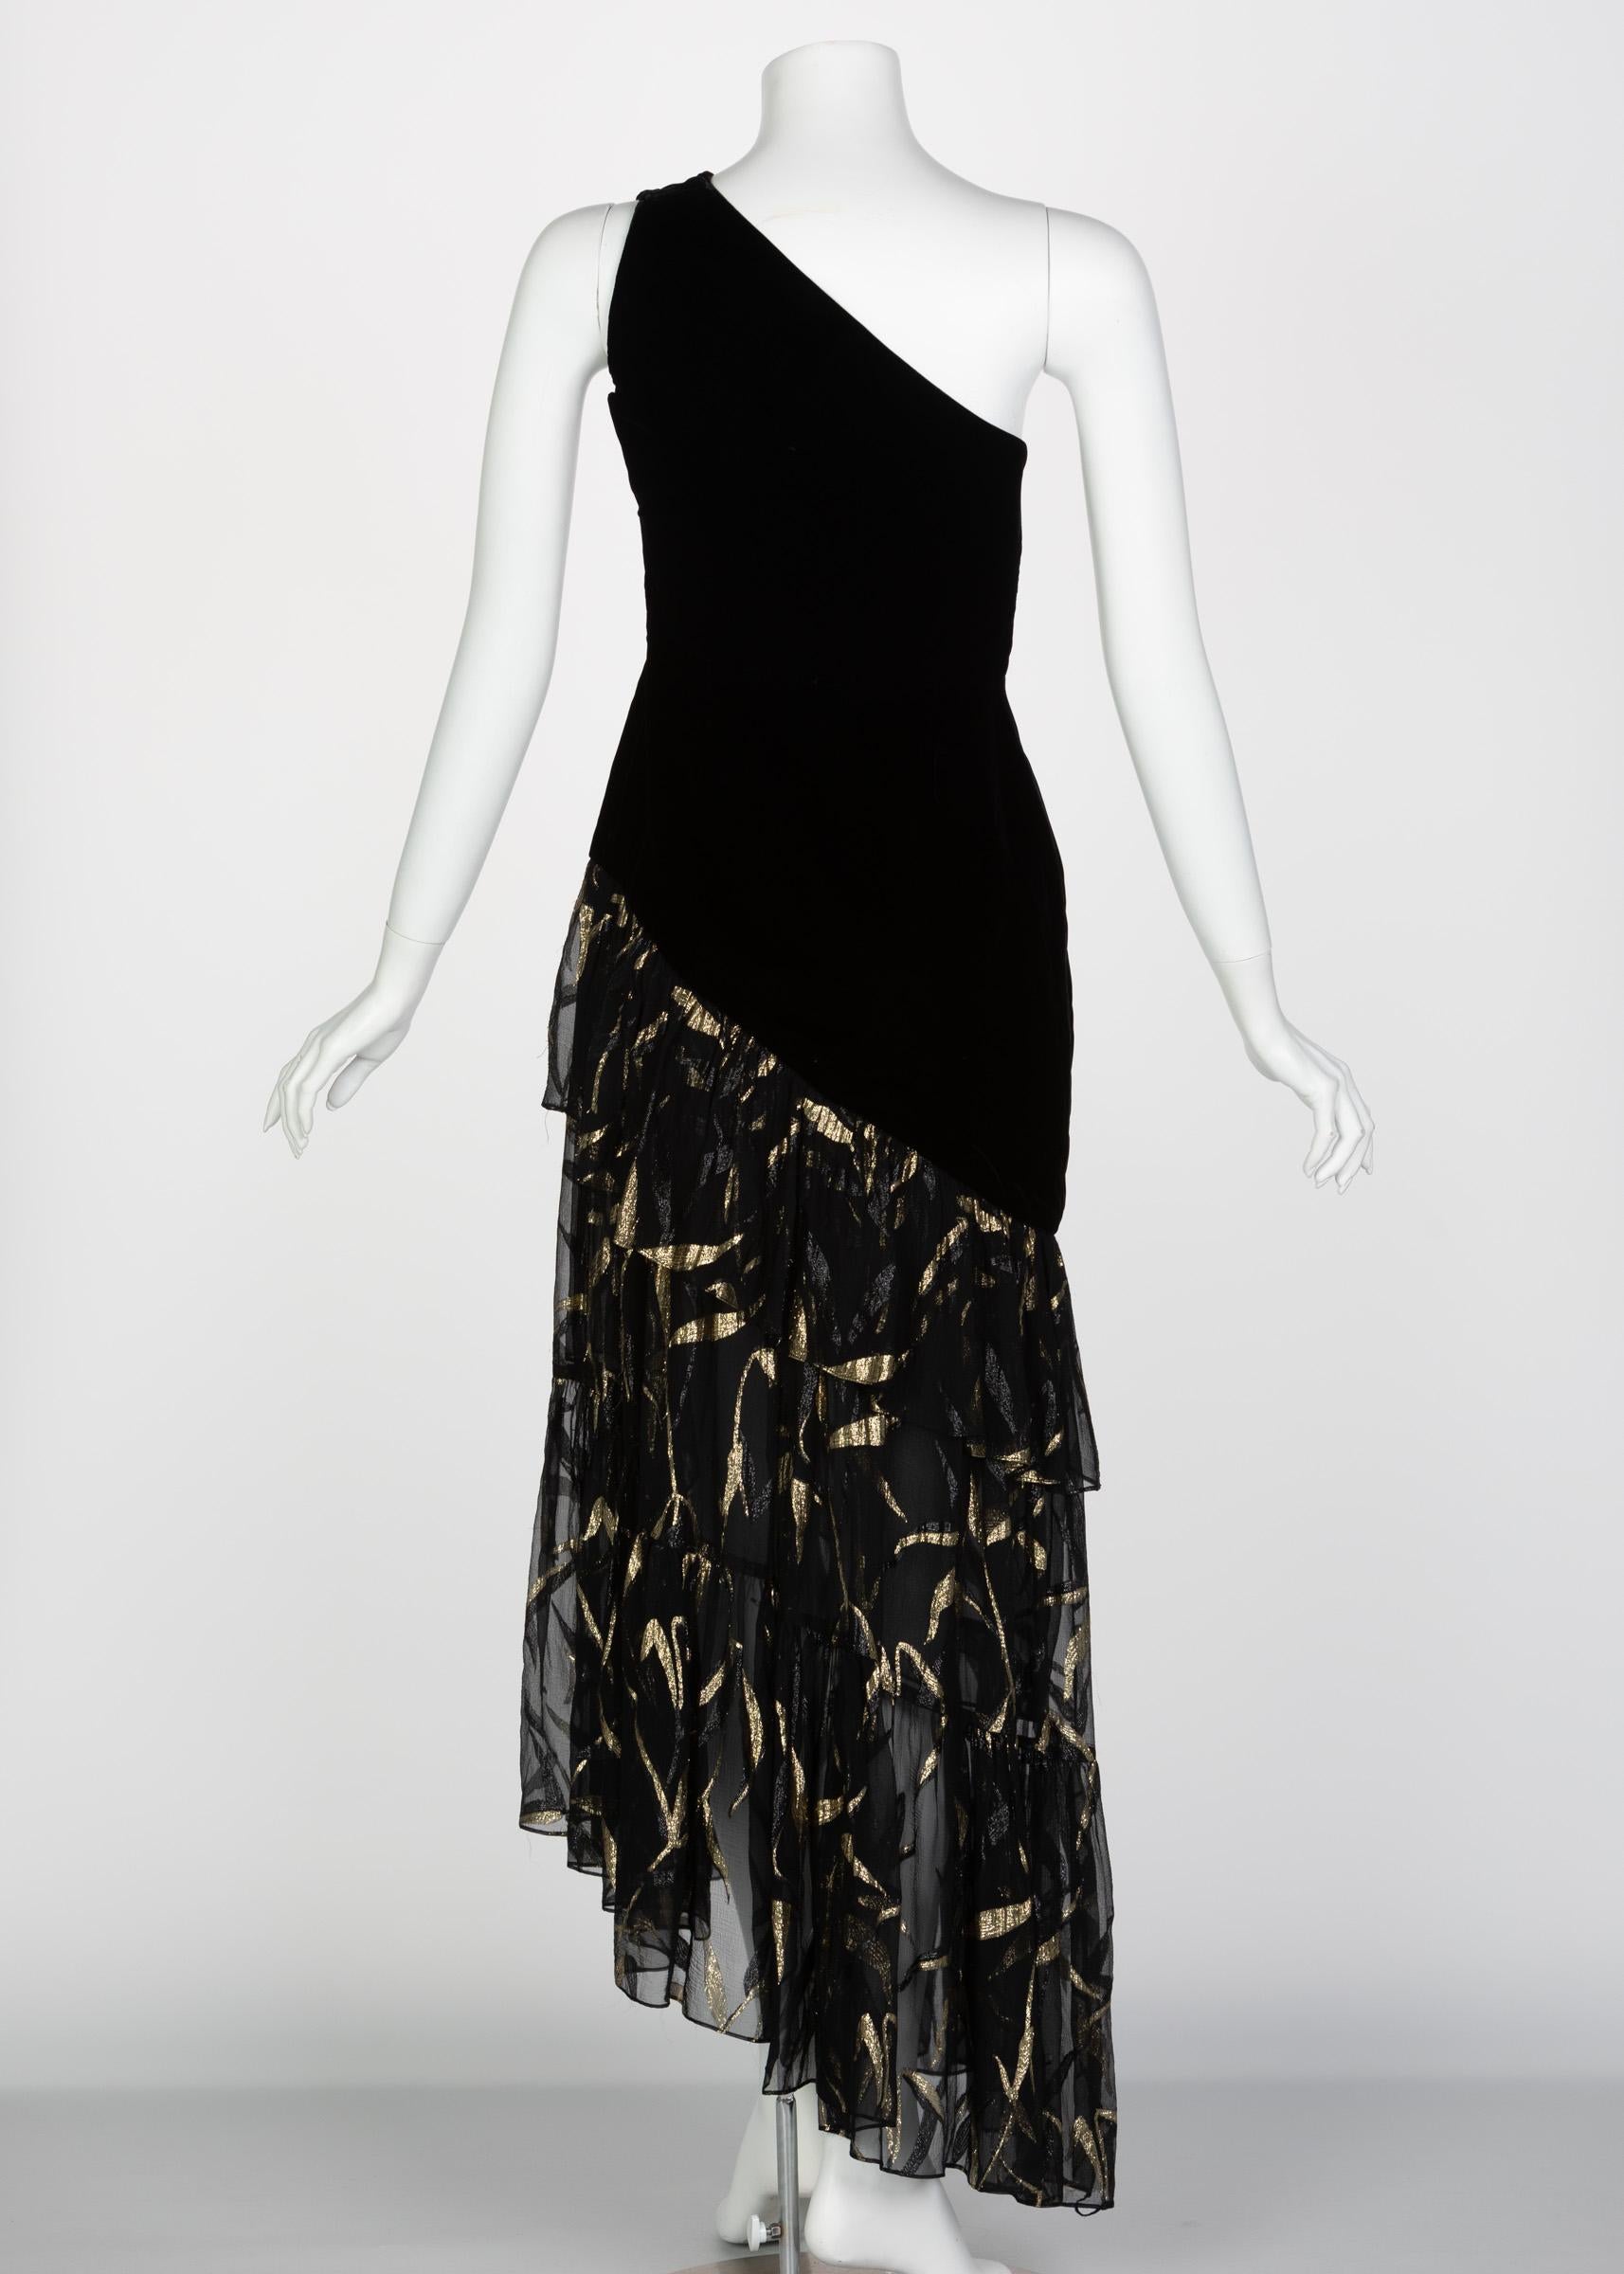 Saint Laurent YSL One shoulder Black Velvet Metallic Layered Dress, 1980s For Sale 2